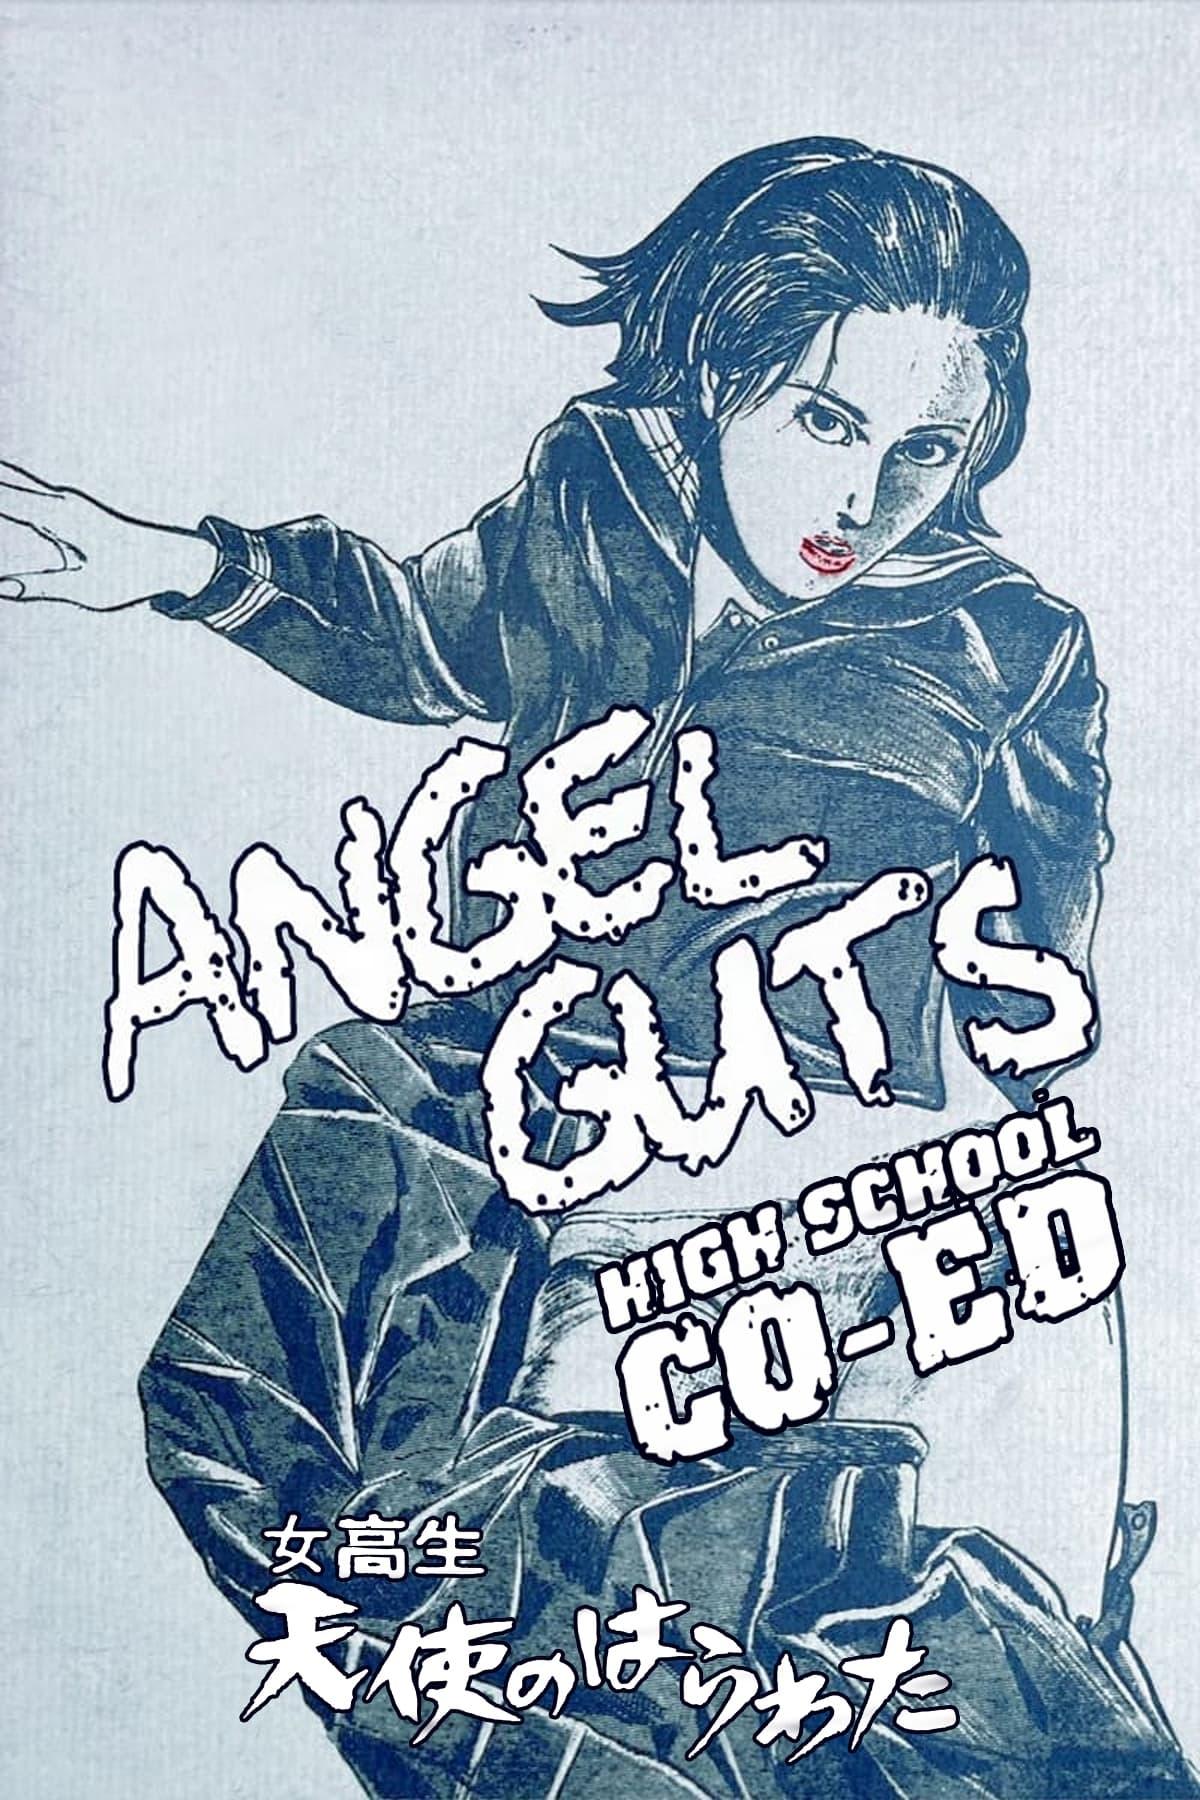 Angel Guts: High School Co-Ed poster